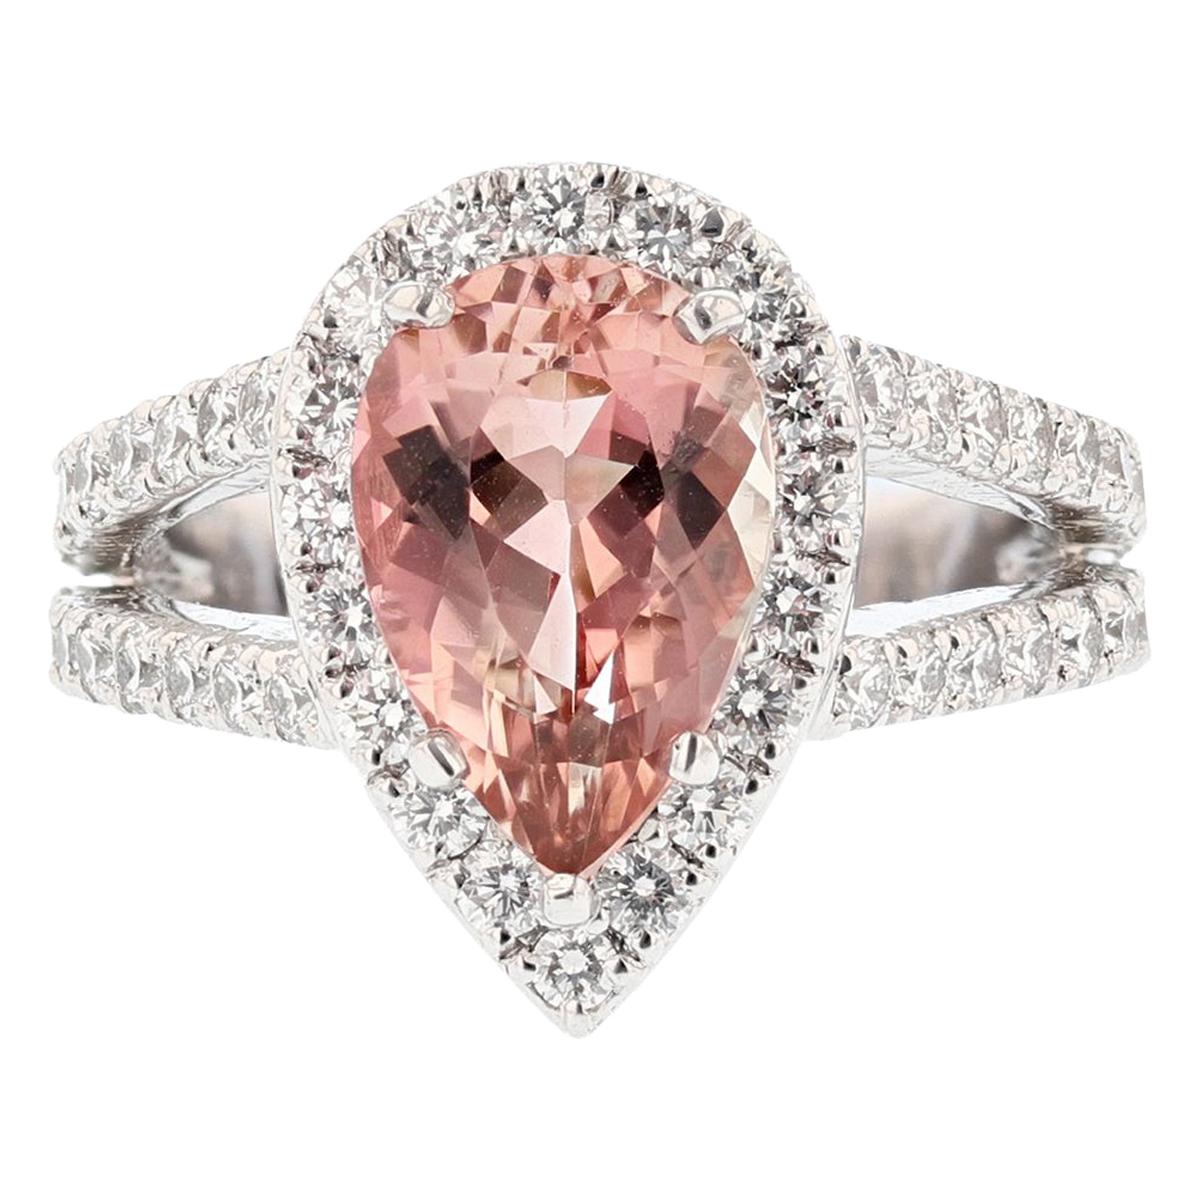 Nazarelle Platinum 3.22 Carat Pear Shaped Pink Tourmaline Diamond Ring